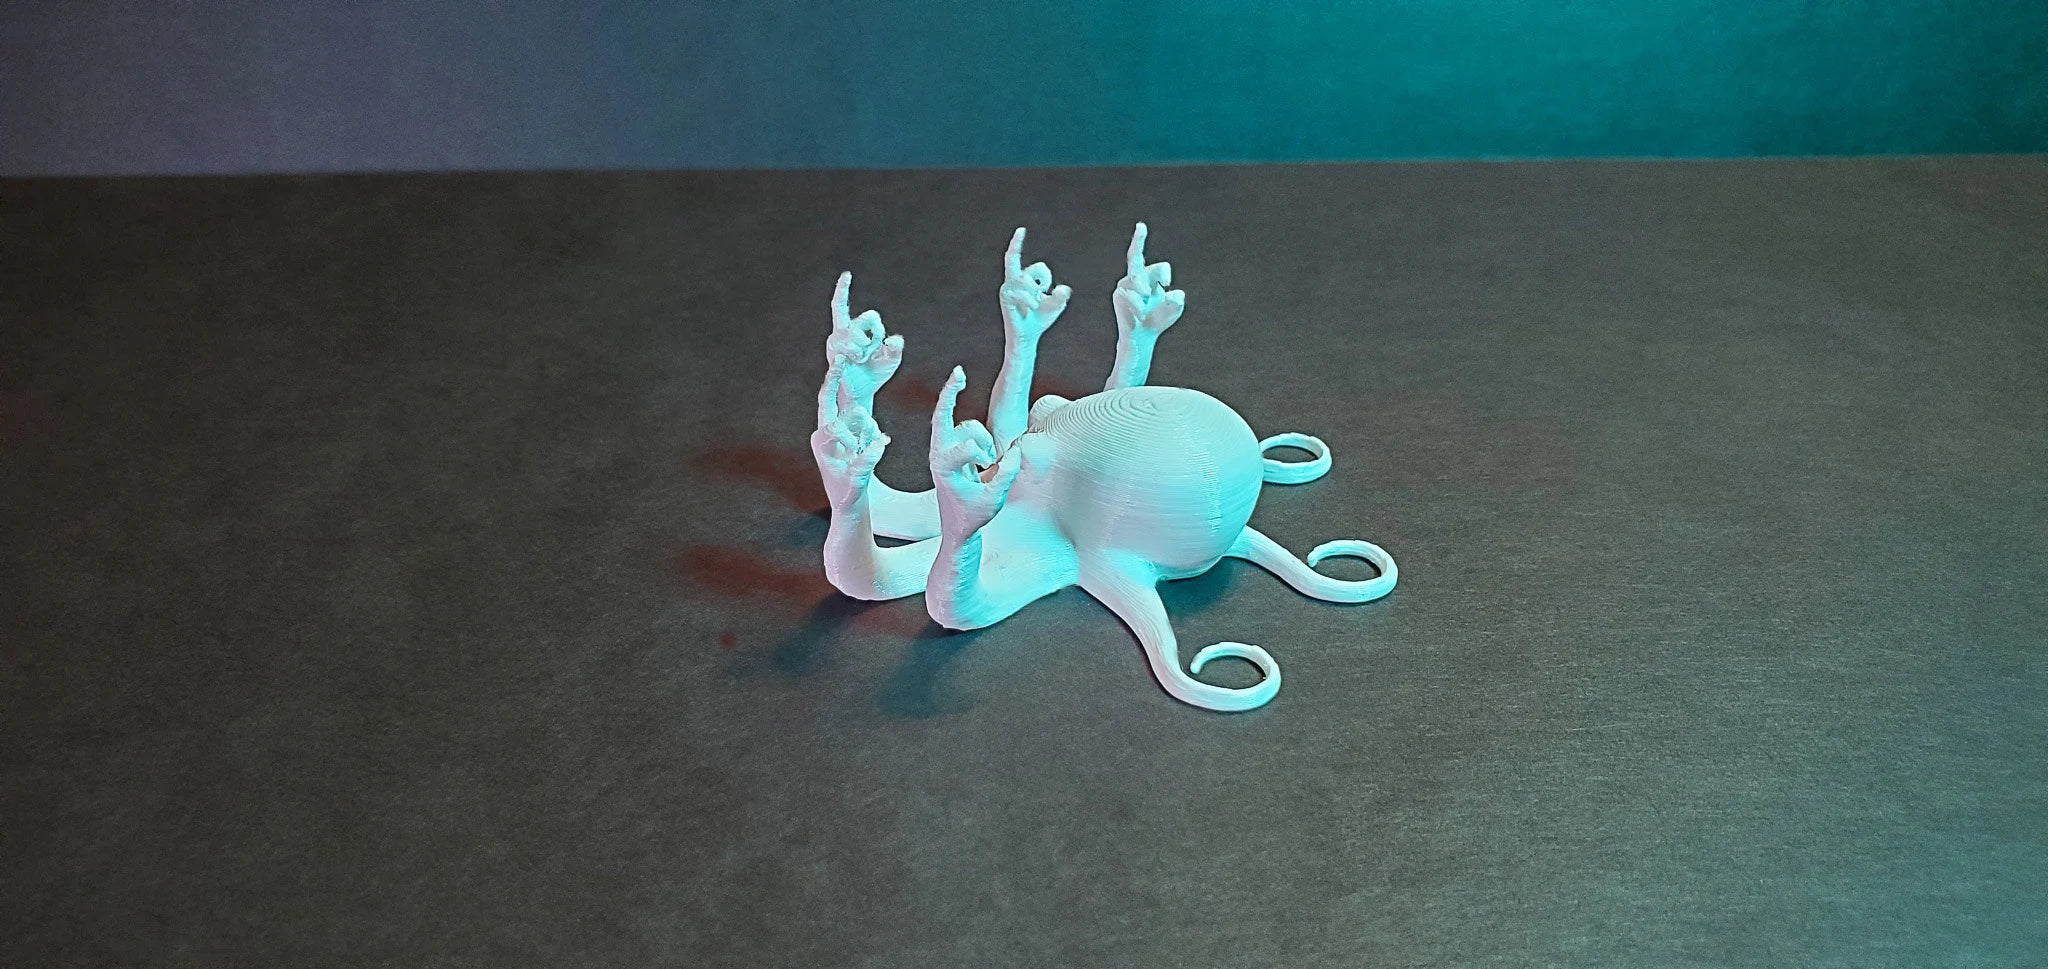 Fucktopus Octopus 90+ Colors: Middle Finger, 3D Printed, Valentines Gift, Vulgar Desk Ornament, Angrypus, Gag Gift, Rude, Octopoda, Vulgaris